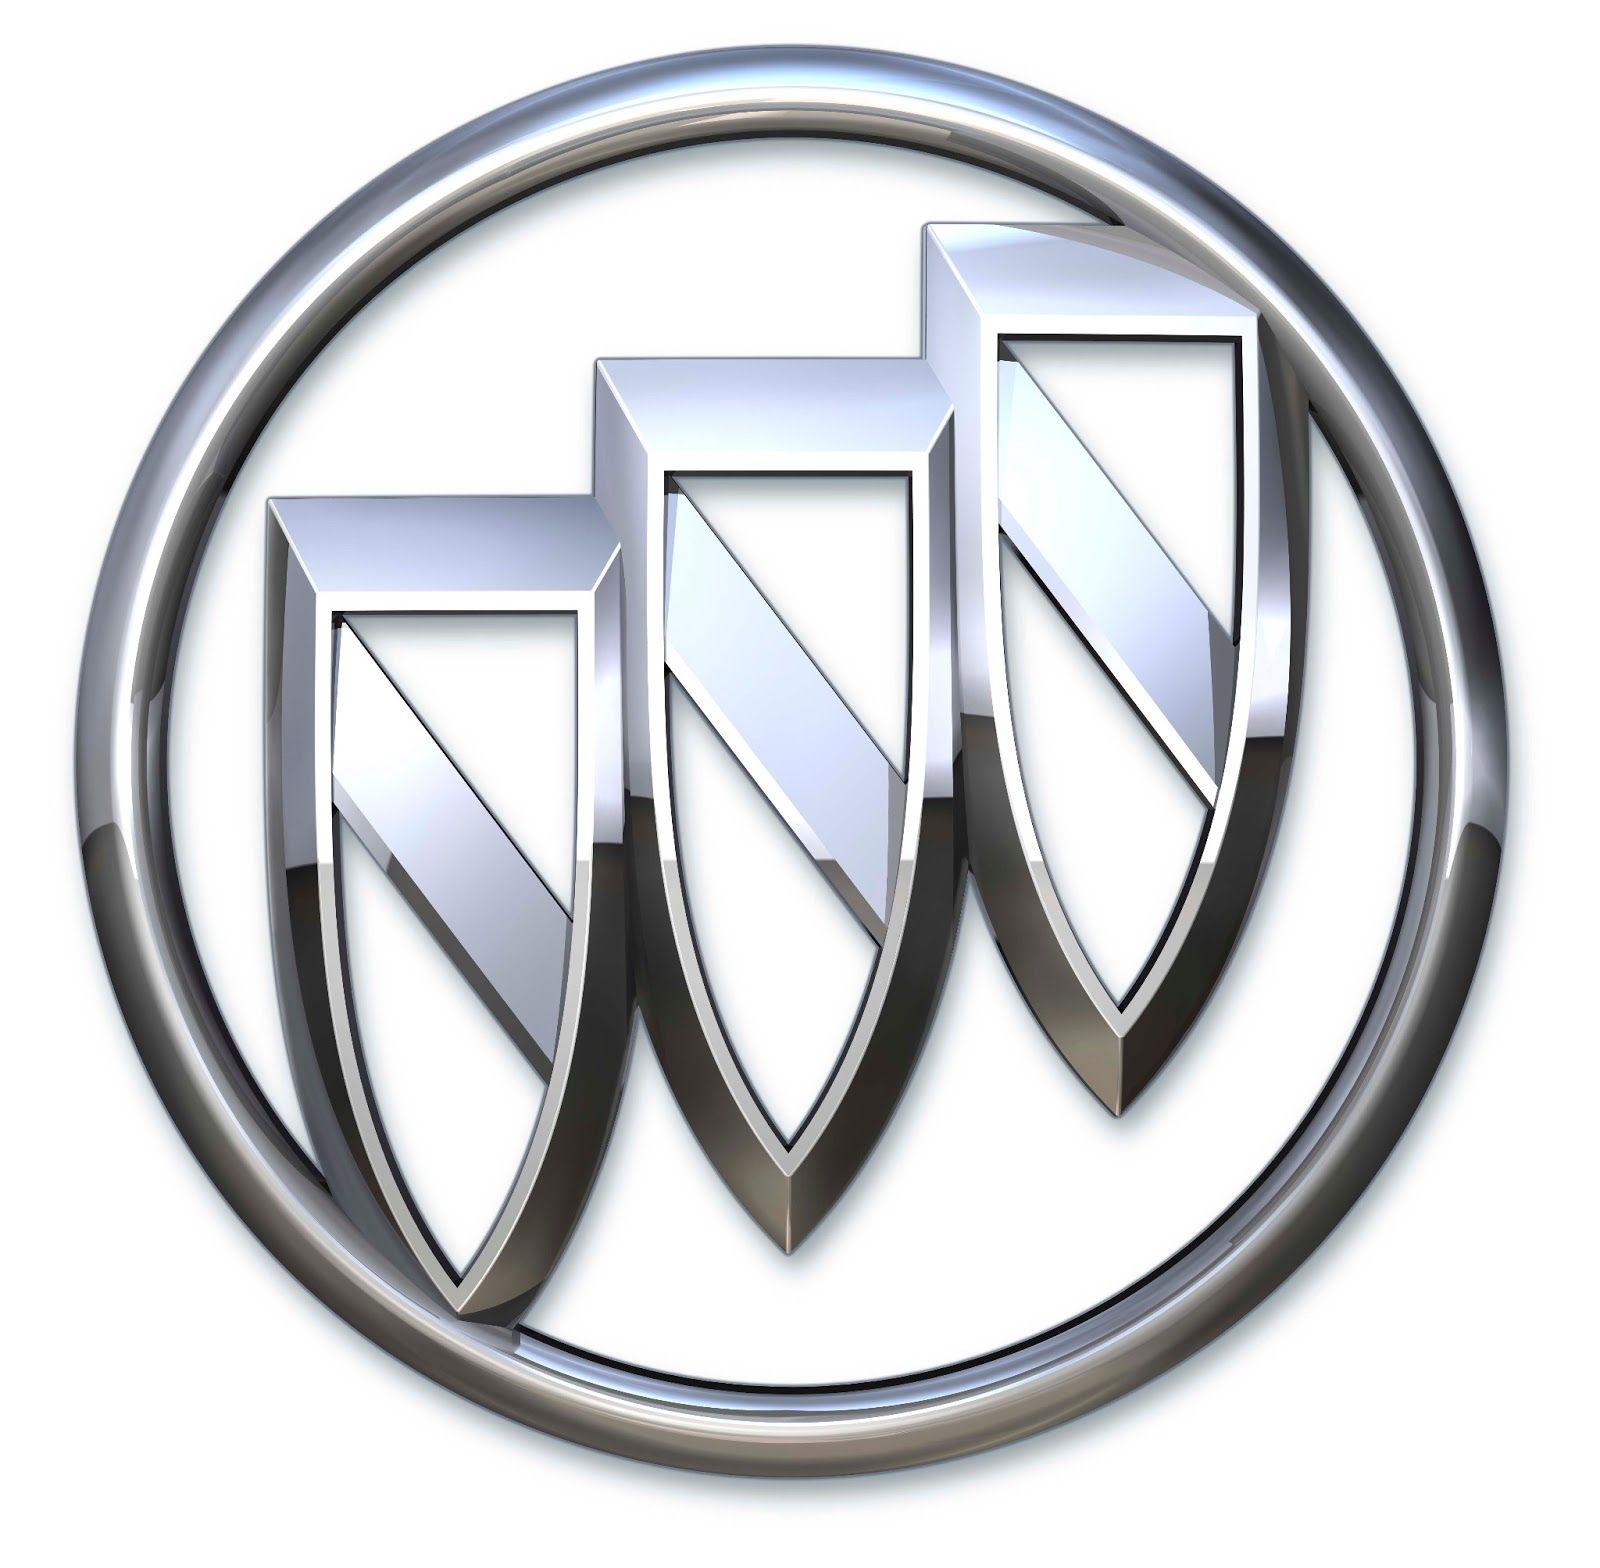 Grey Lion Car Logo - Buick Logo, Buick Car Symbol Meaning and History | Car Brand Names.com